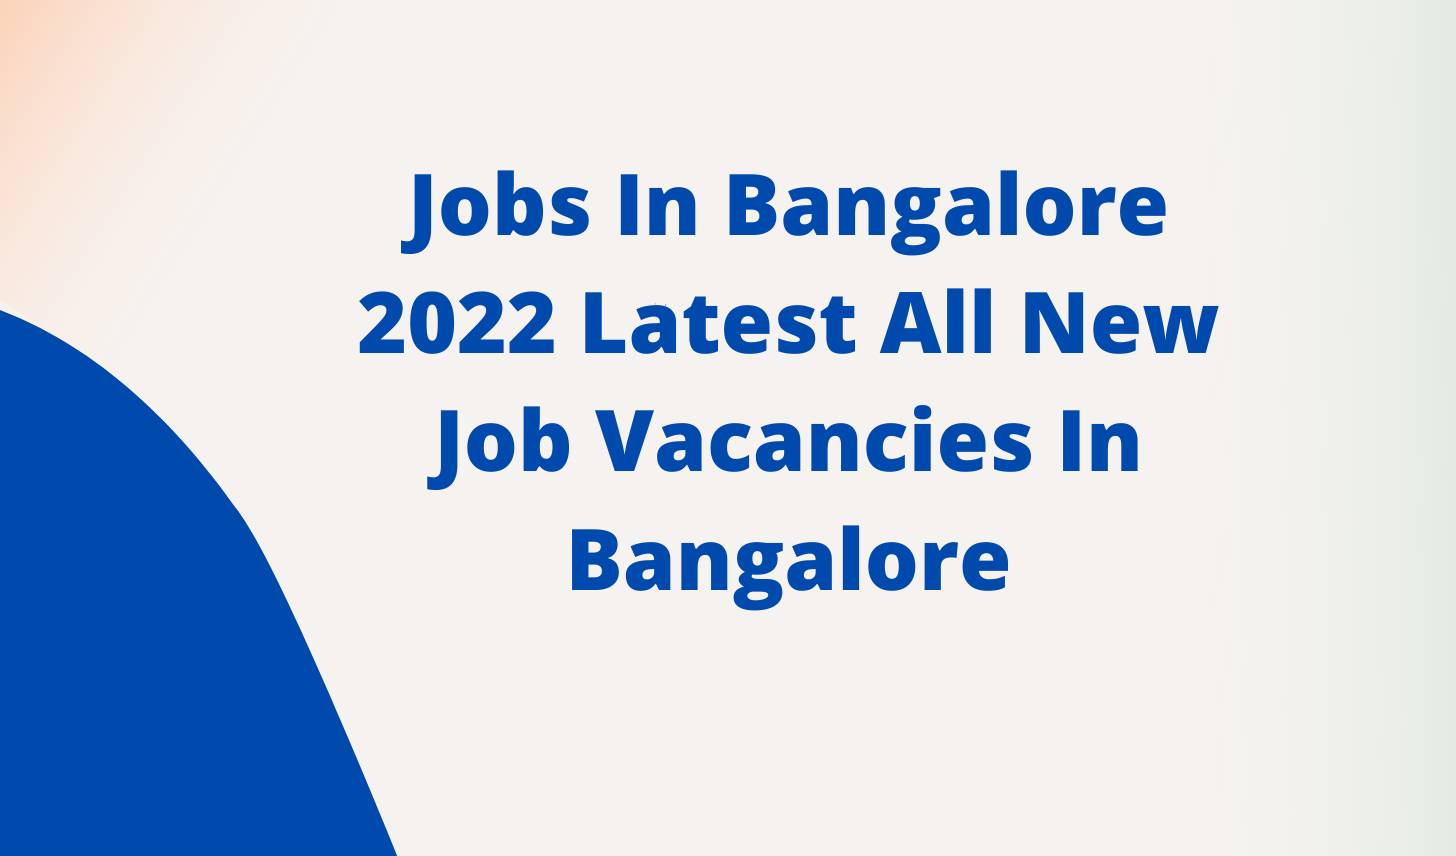 Jobs in Bangalore 2022